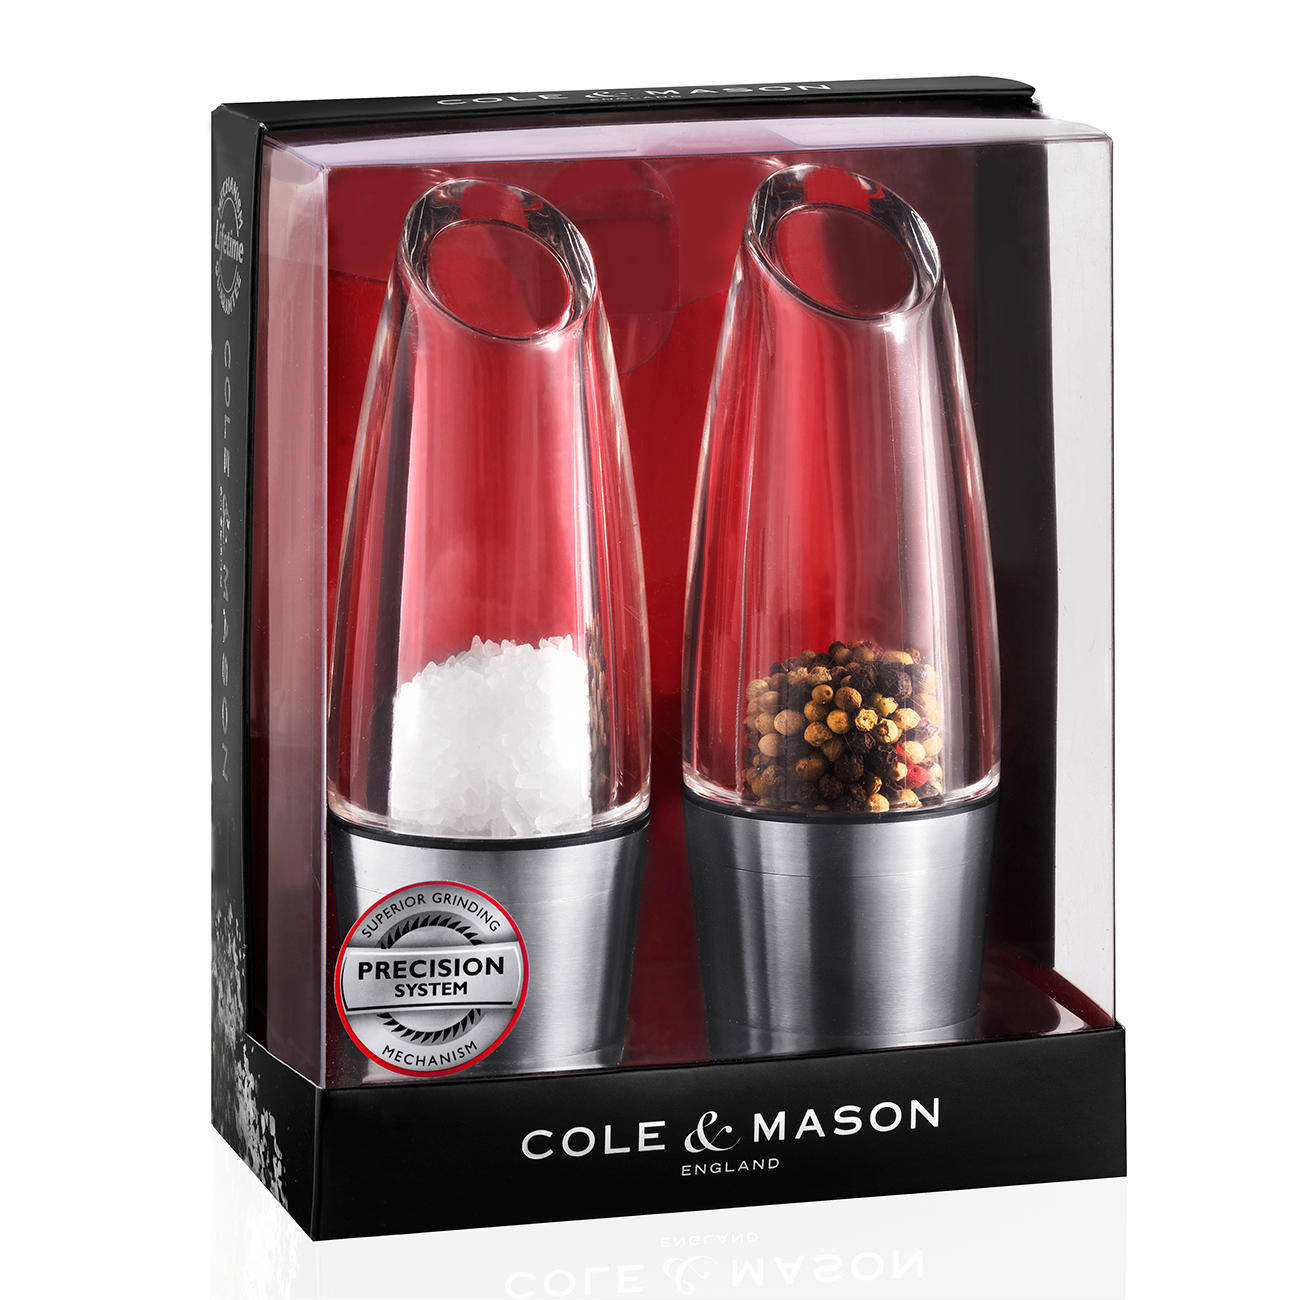 Cole and mason pepper mill